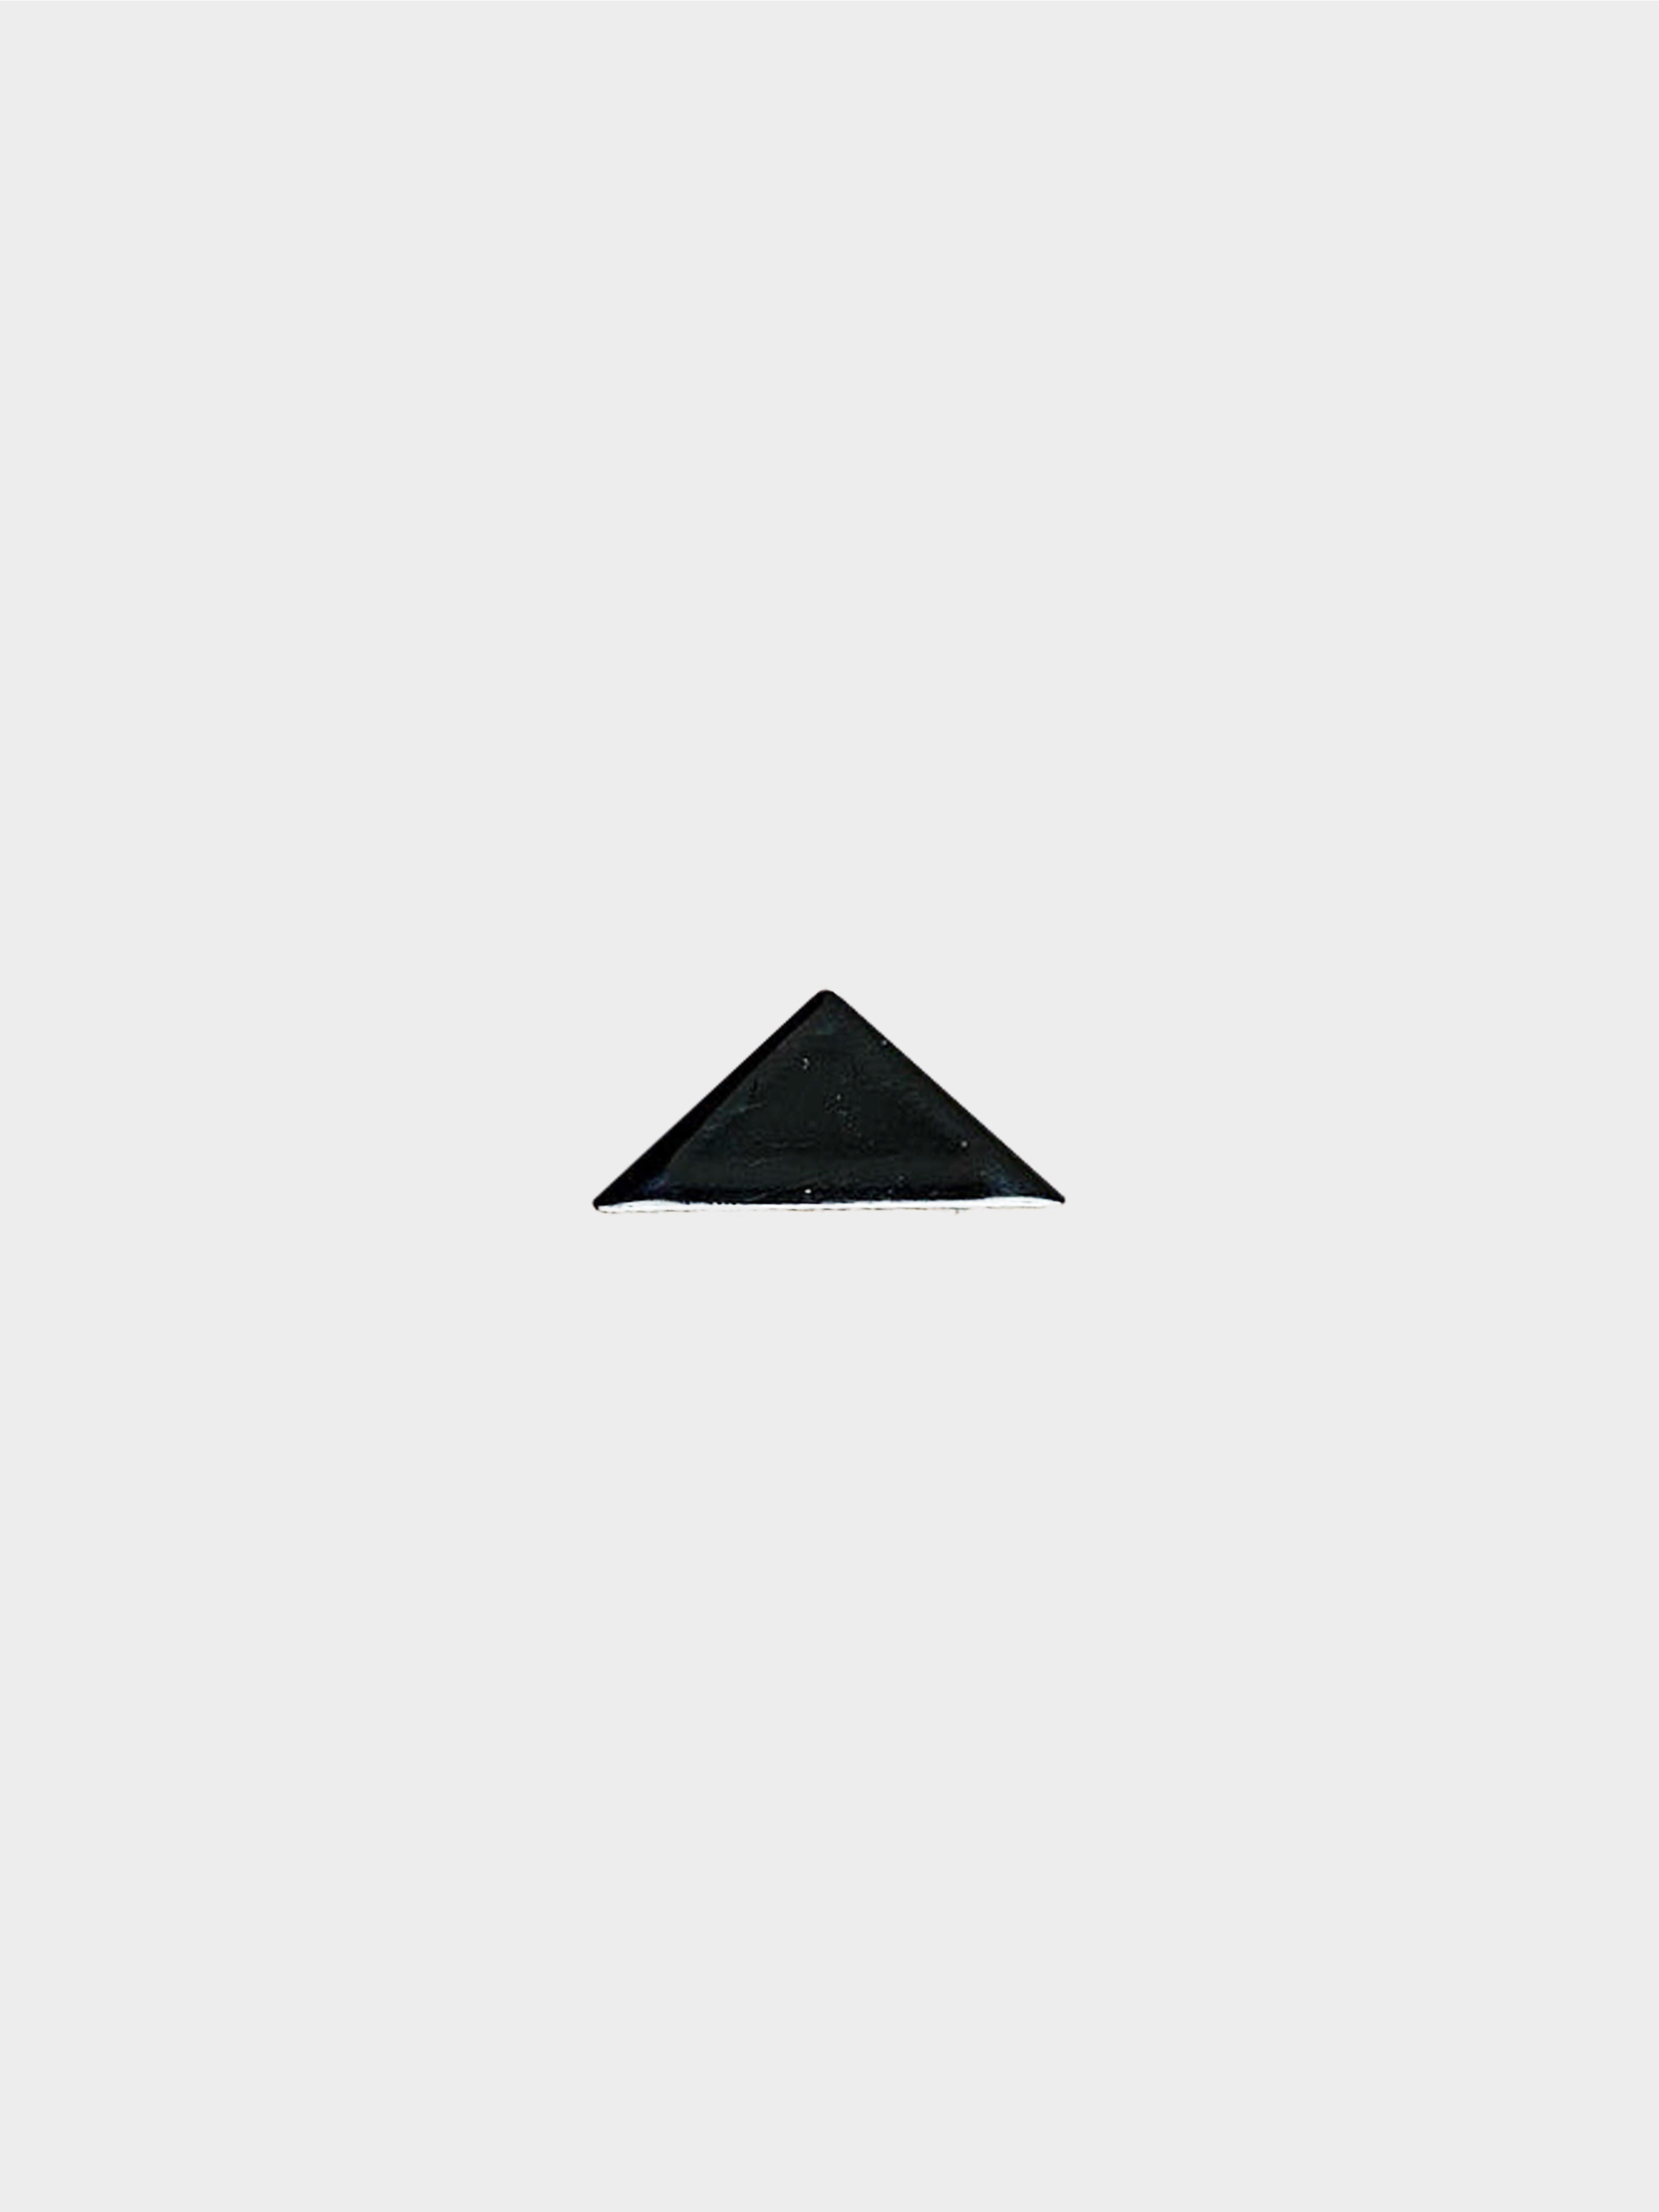 Saint Laurent FW 2015 Black Triangle Pin Brooch